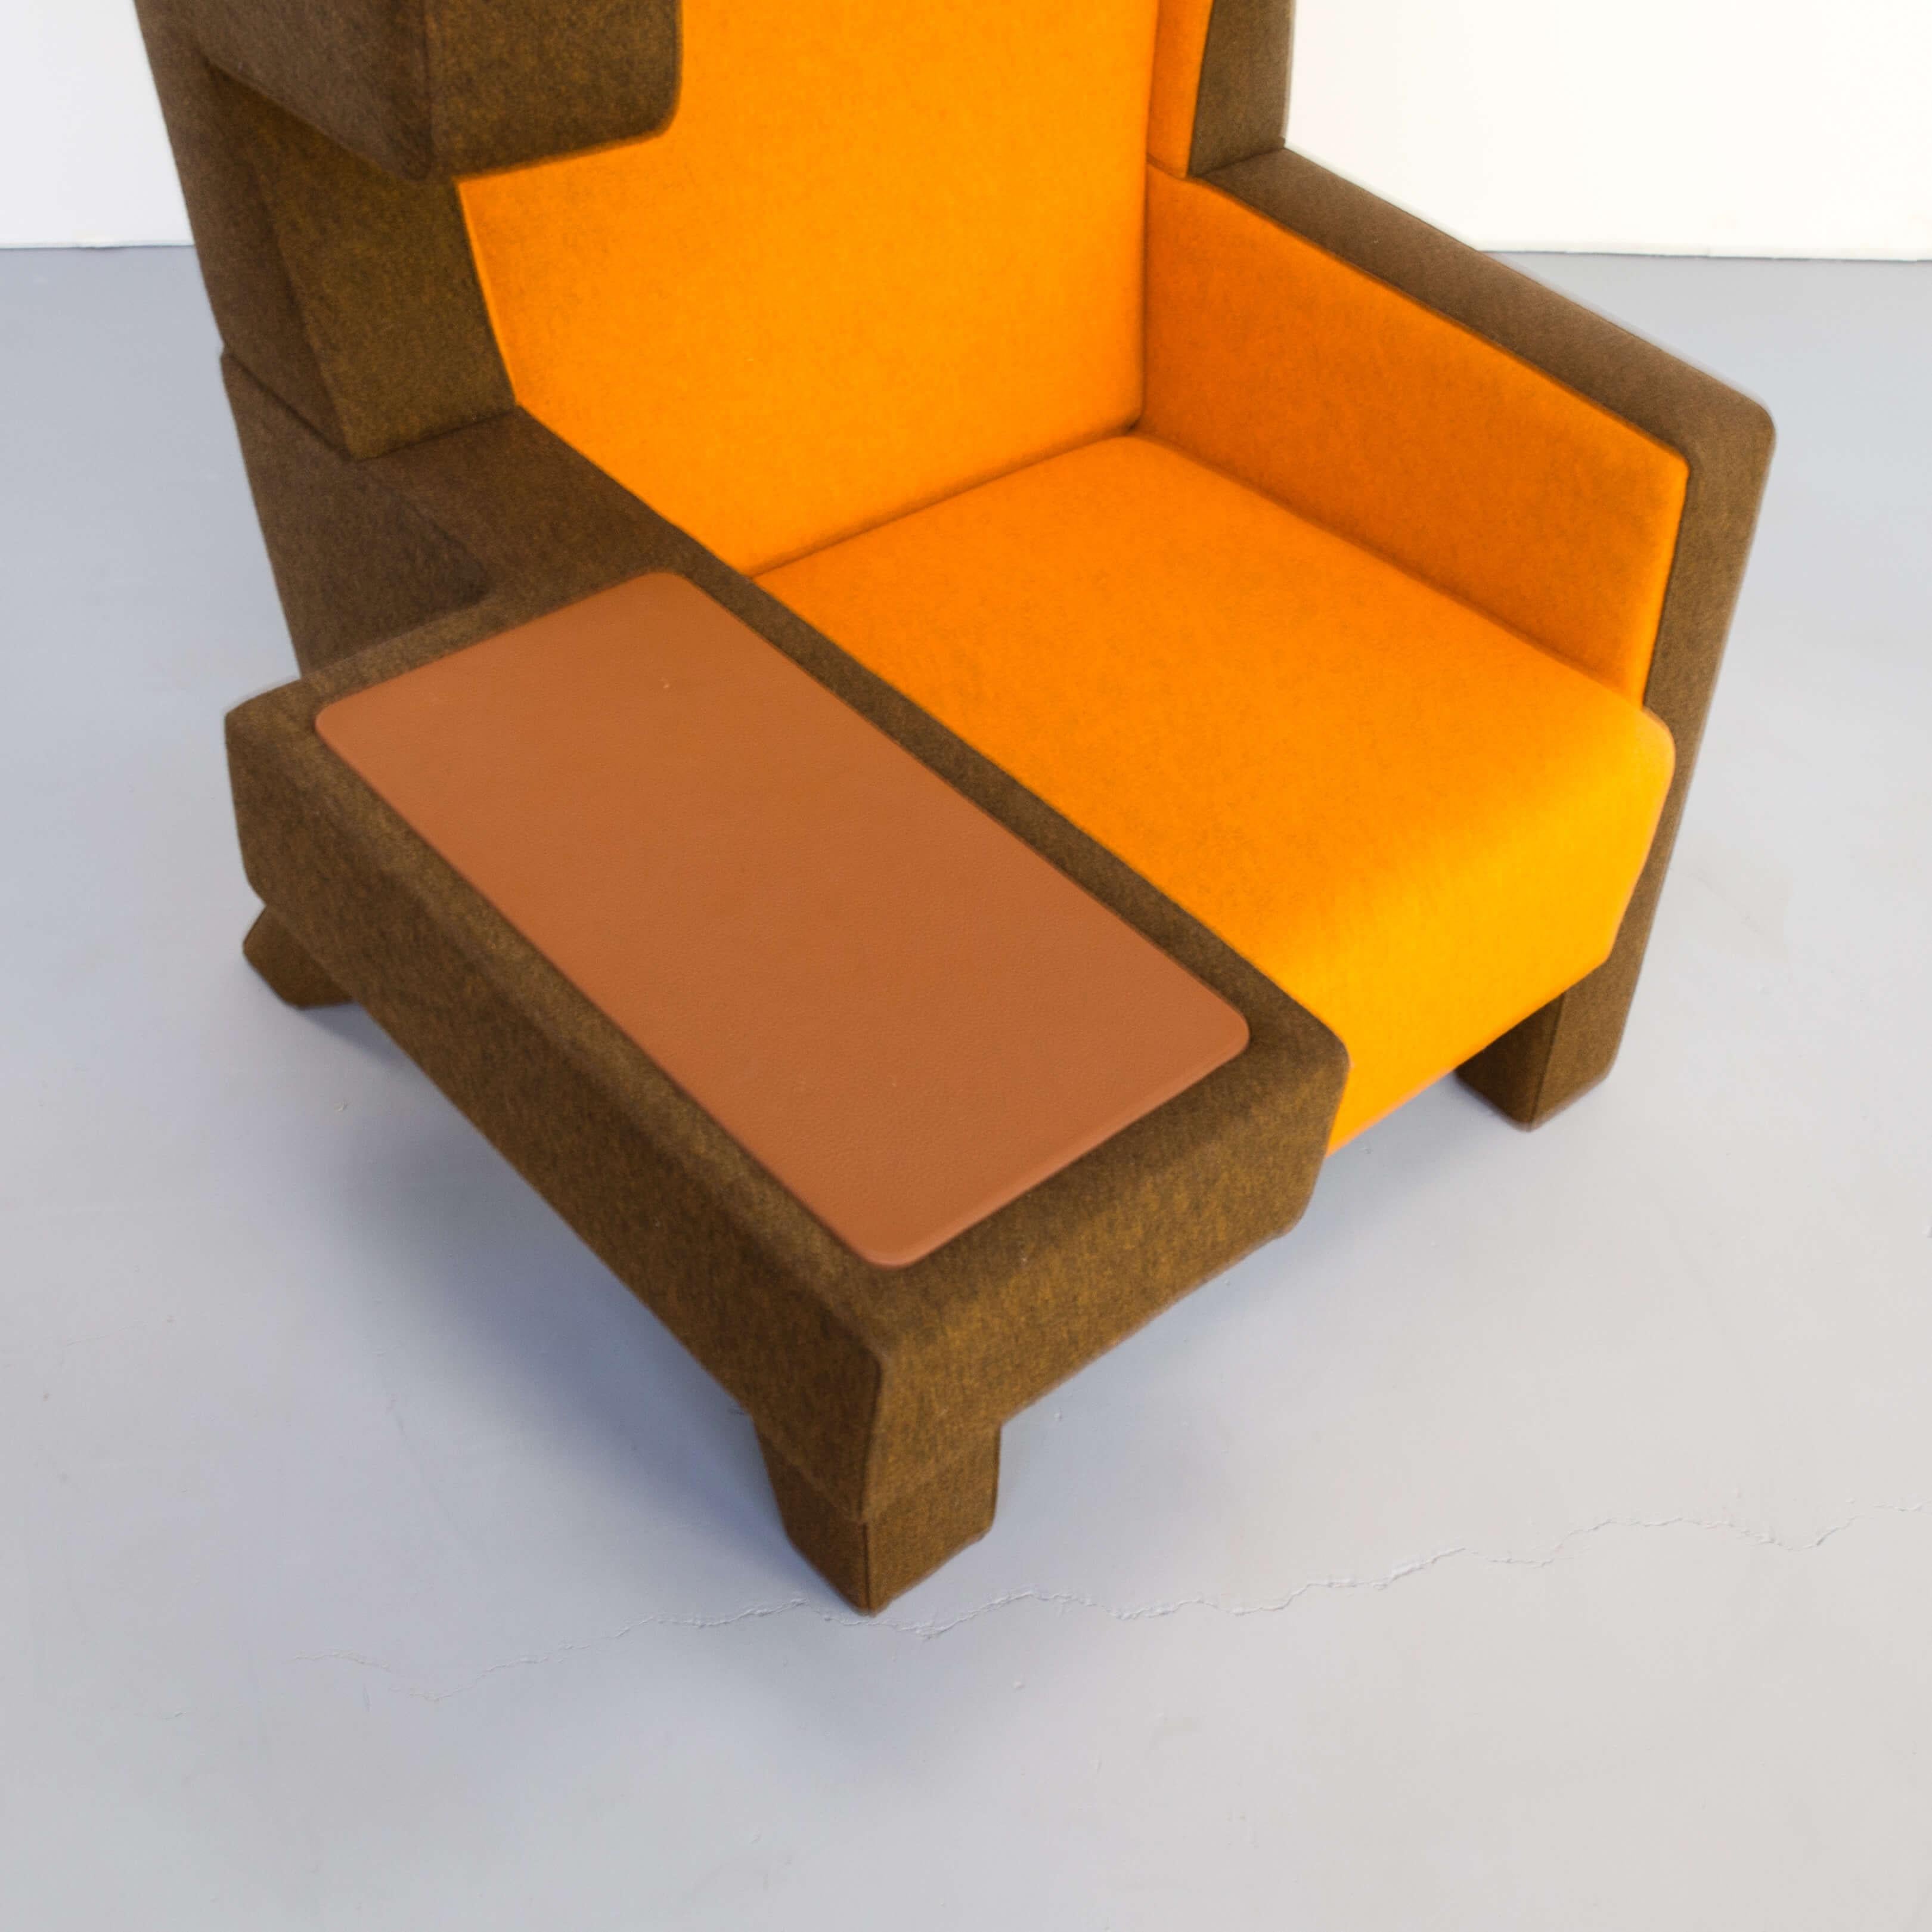 Jürgen Bey ‘Ear Chair’ for Prooff In Good Condition For Sale In Amstelveen, Noord